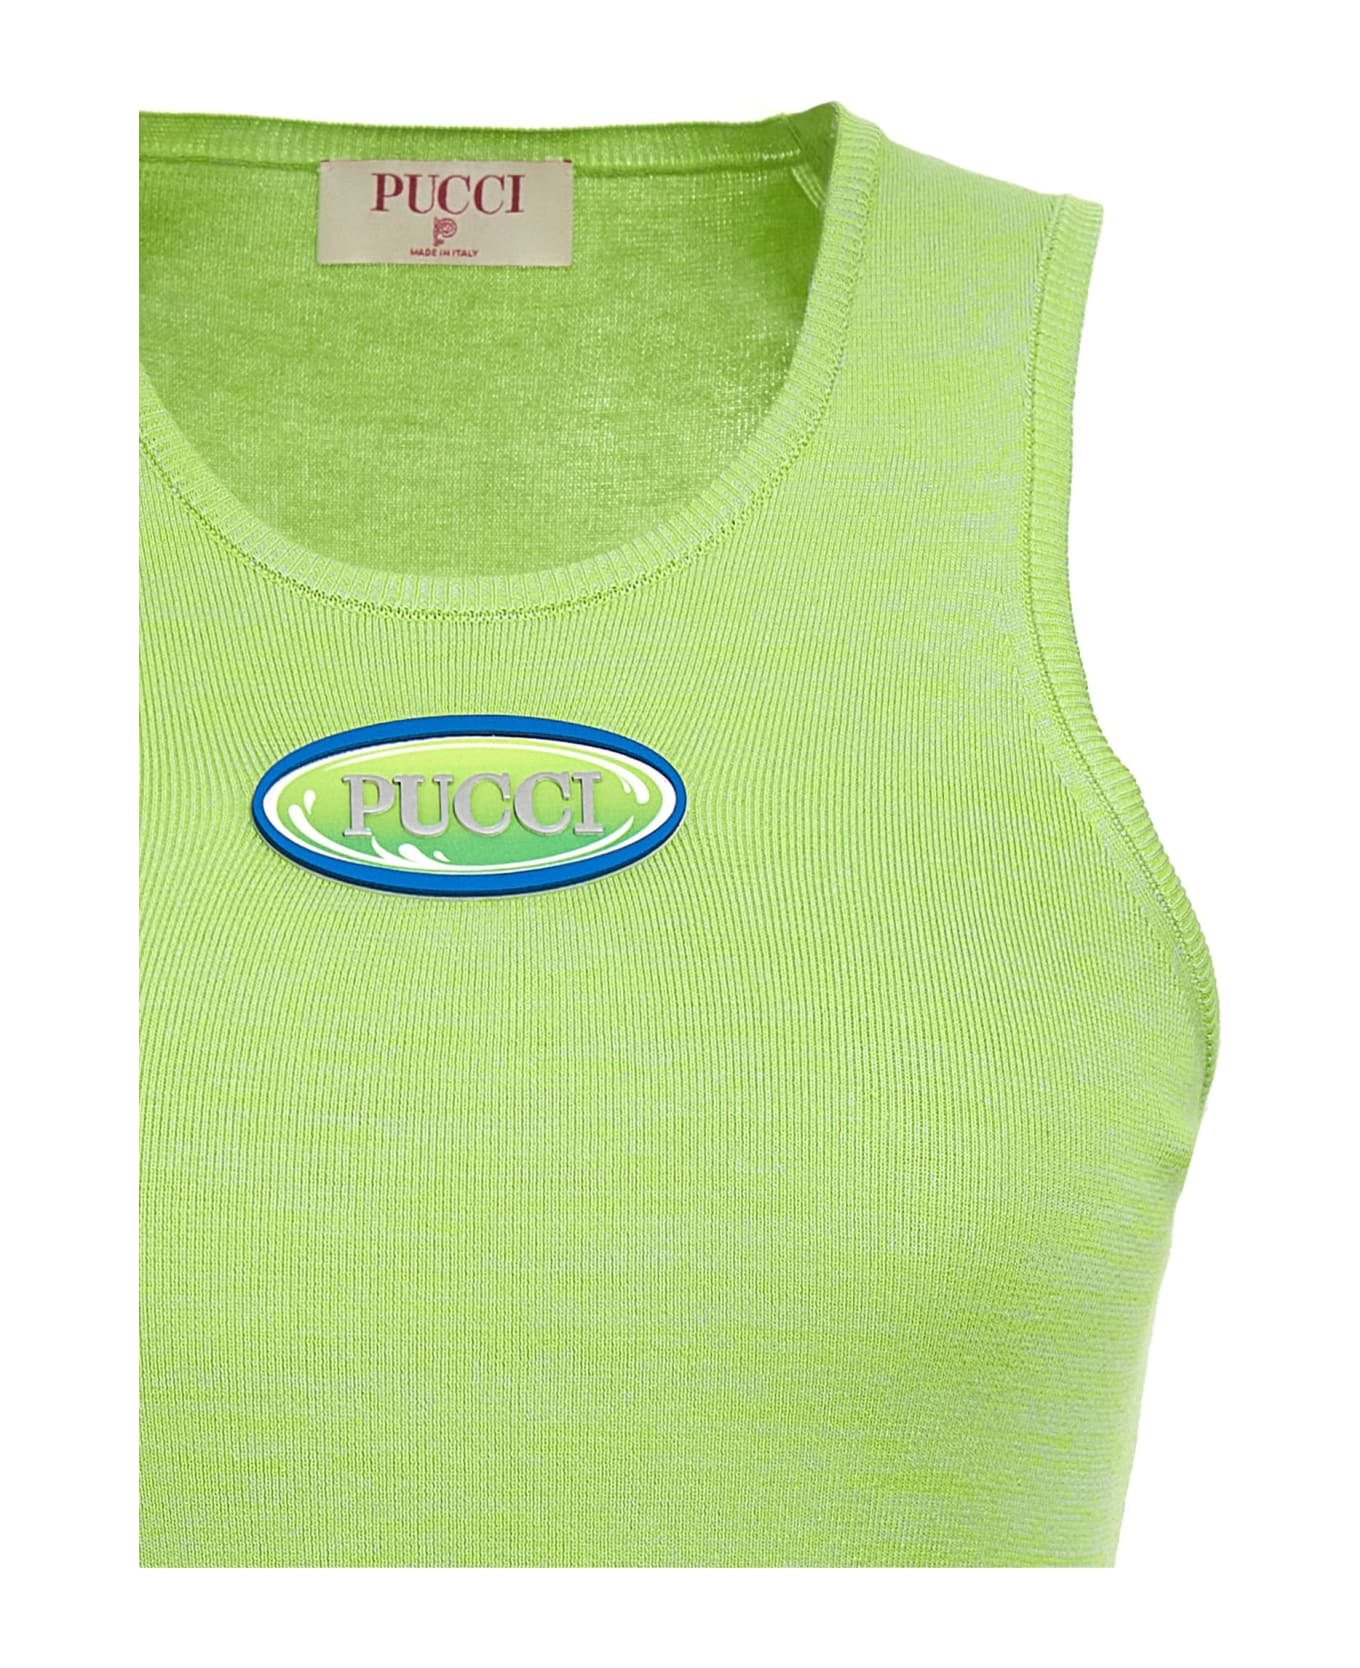 Pucci Surf Tank Top - Green